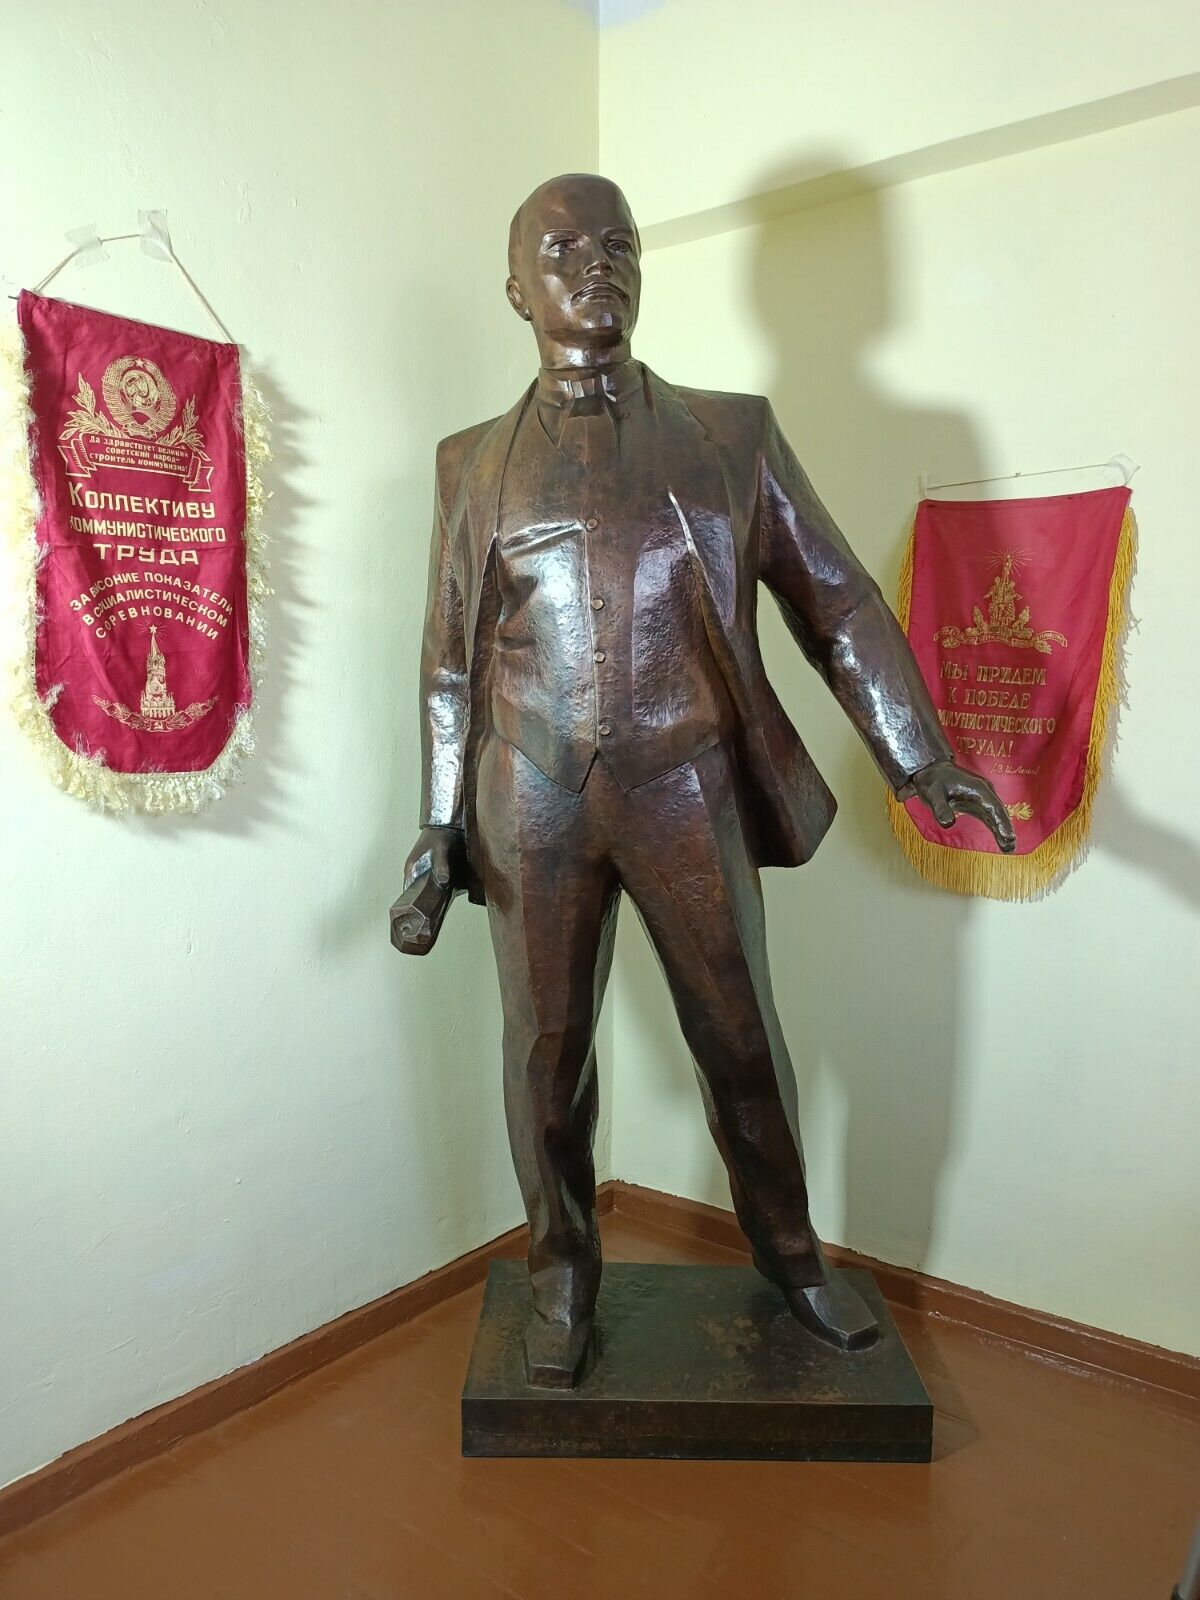 Statue of Vladimir Ilyich Lenin, height 1.80 cm, weight 40 kg, made in 1970.